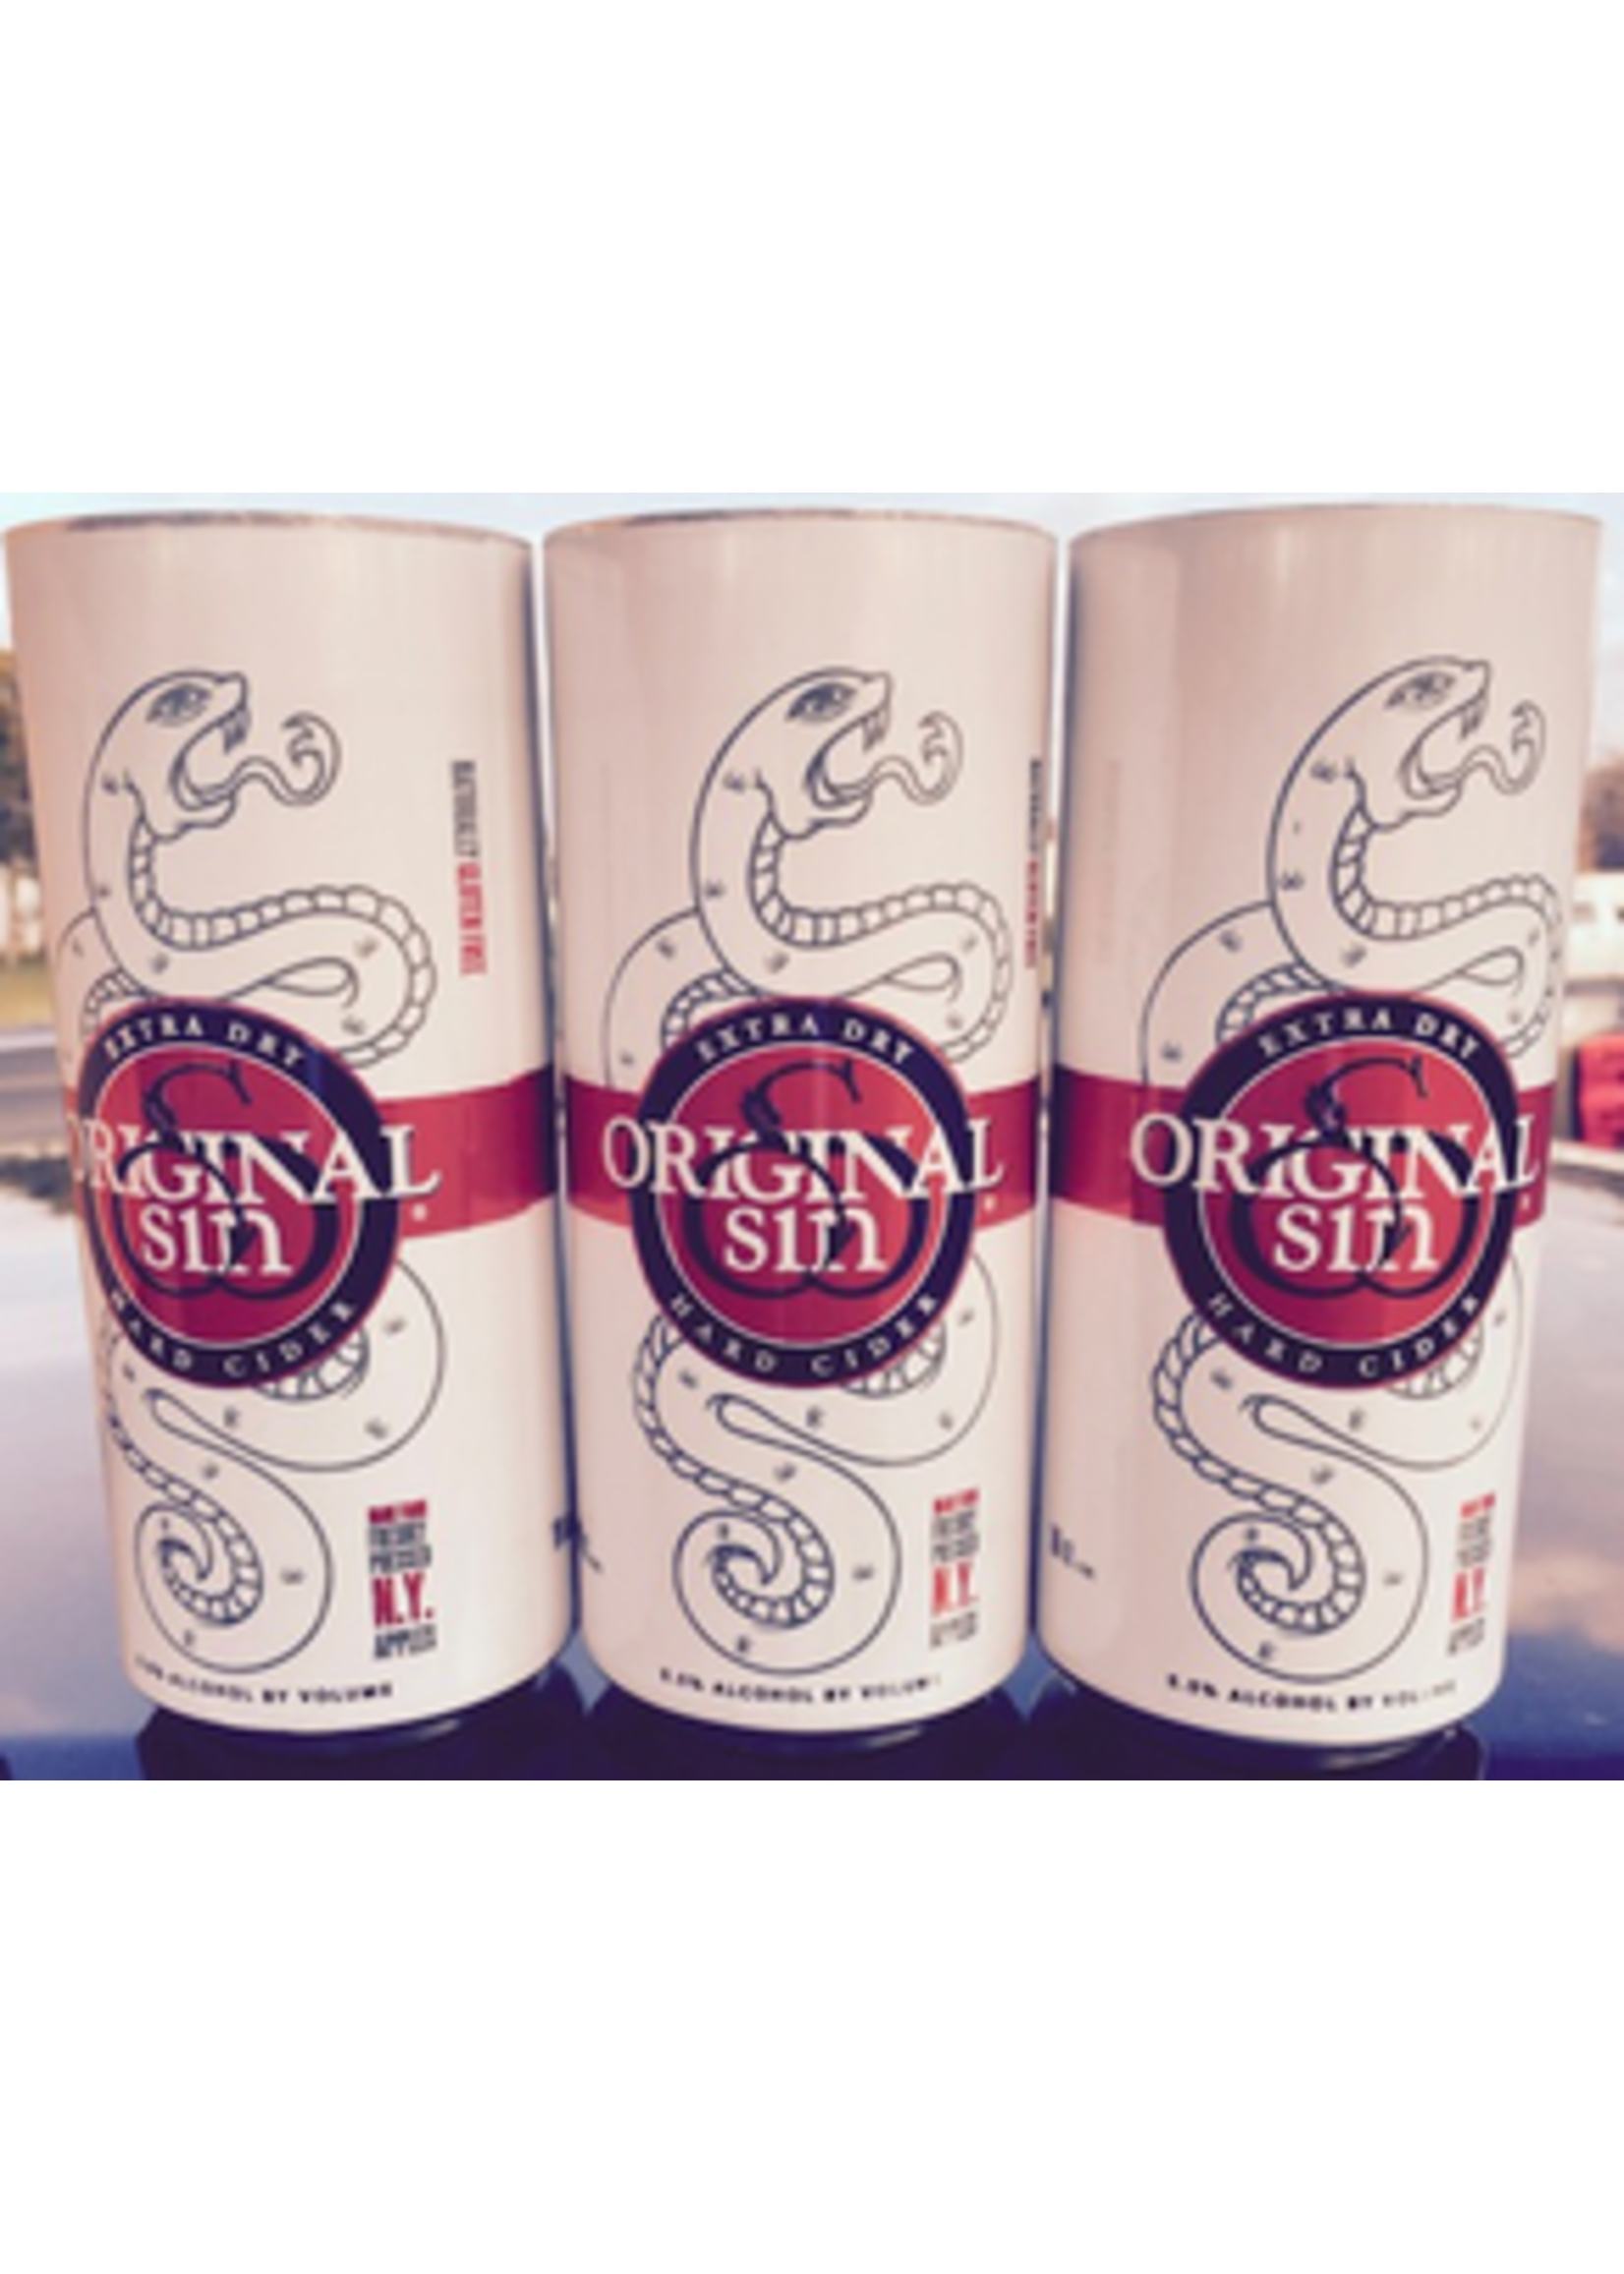 Original Sin Original Sin Cider / Extra Dry Cider / Can 473mL